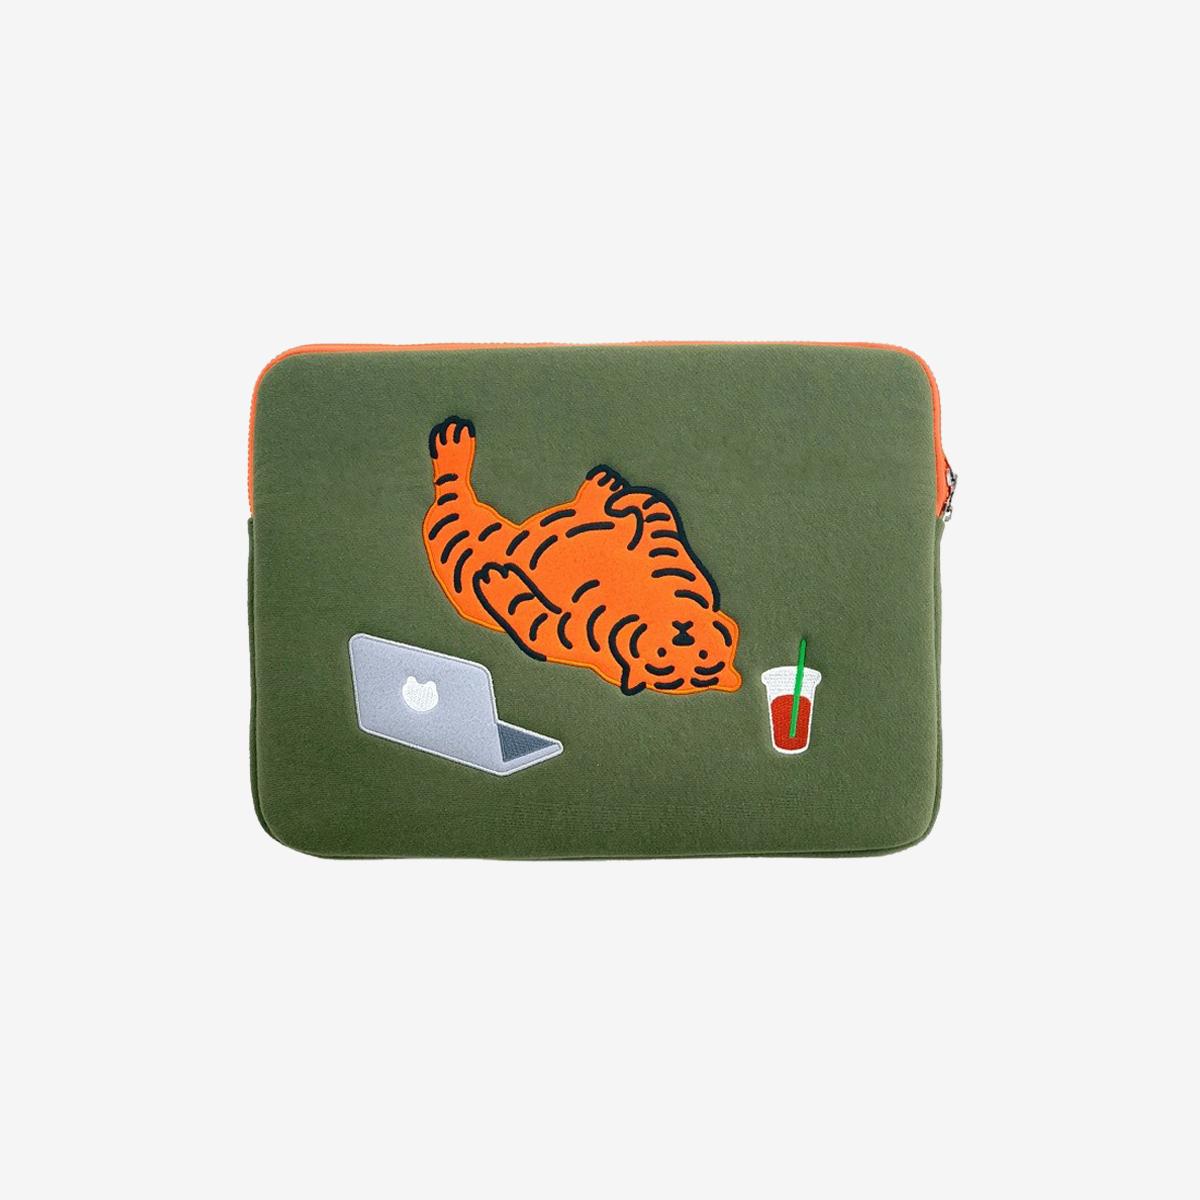 Lazt Tiger筆電收納包